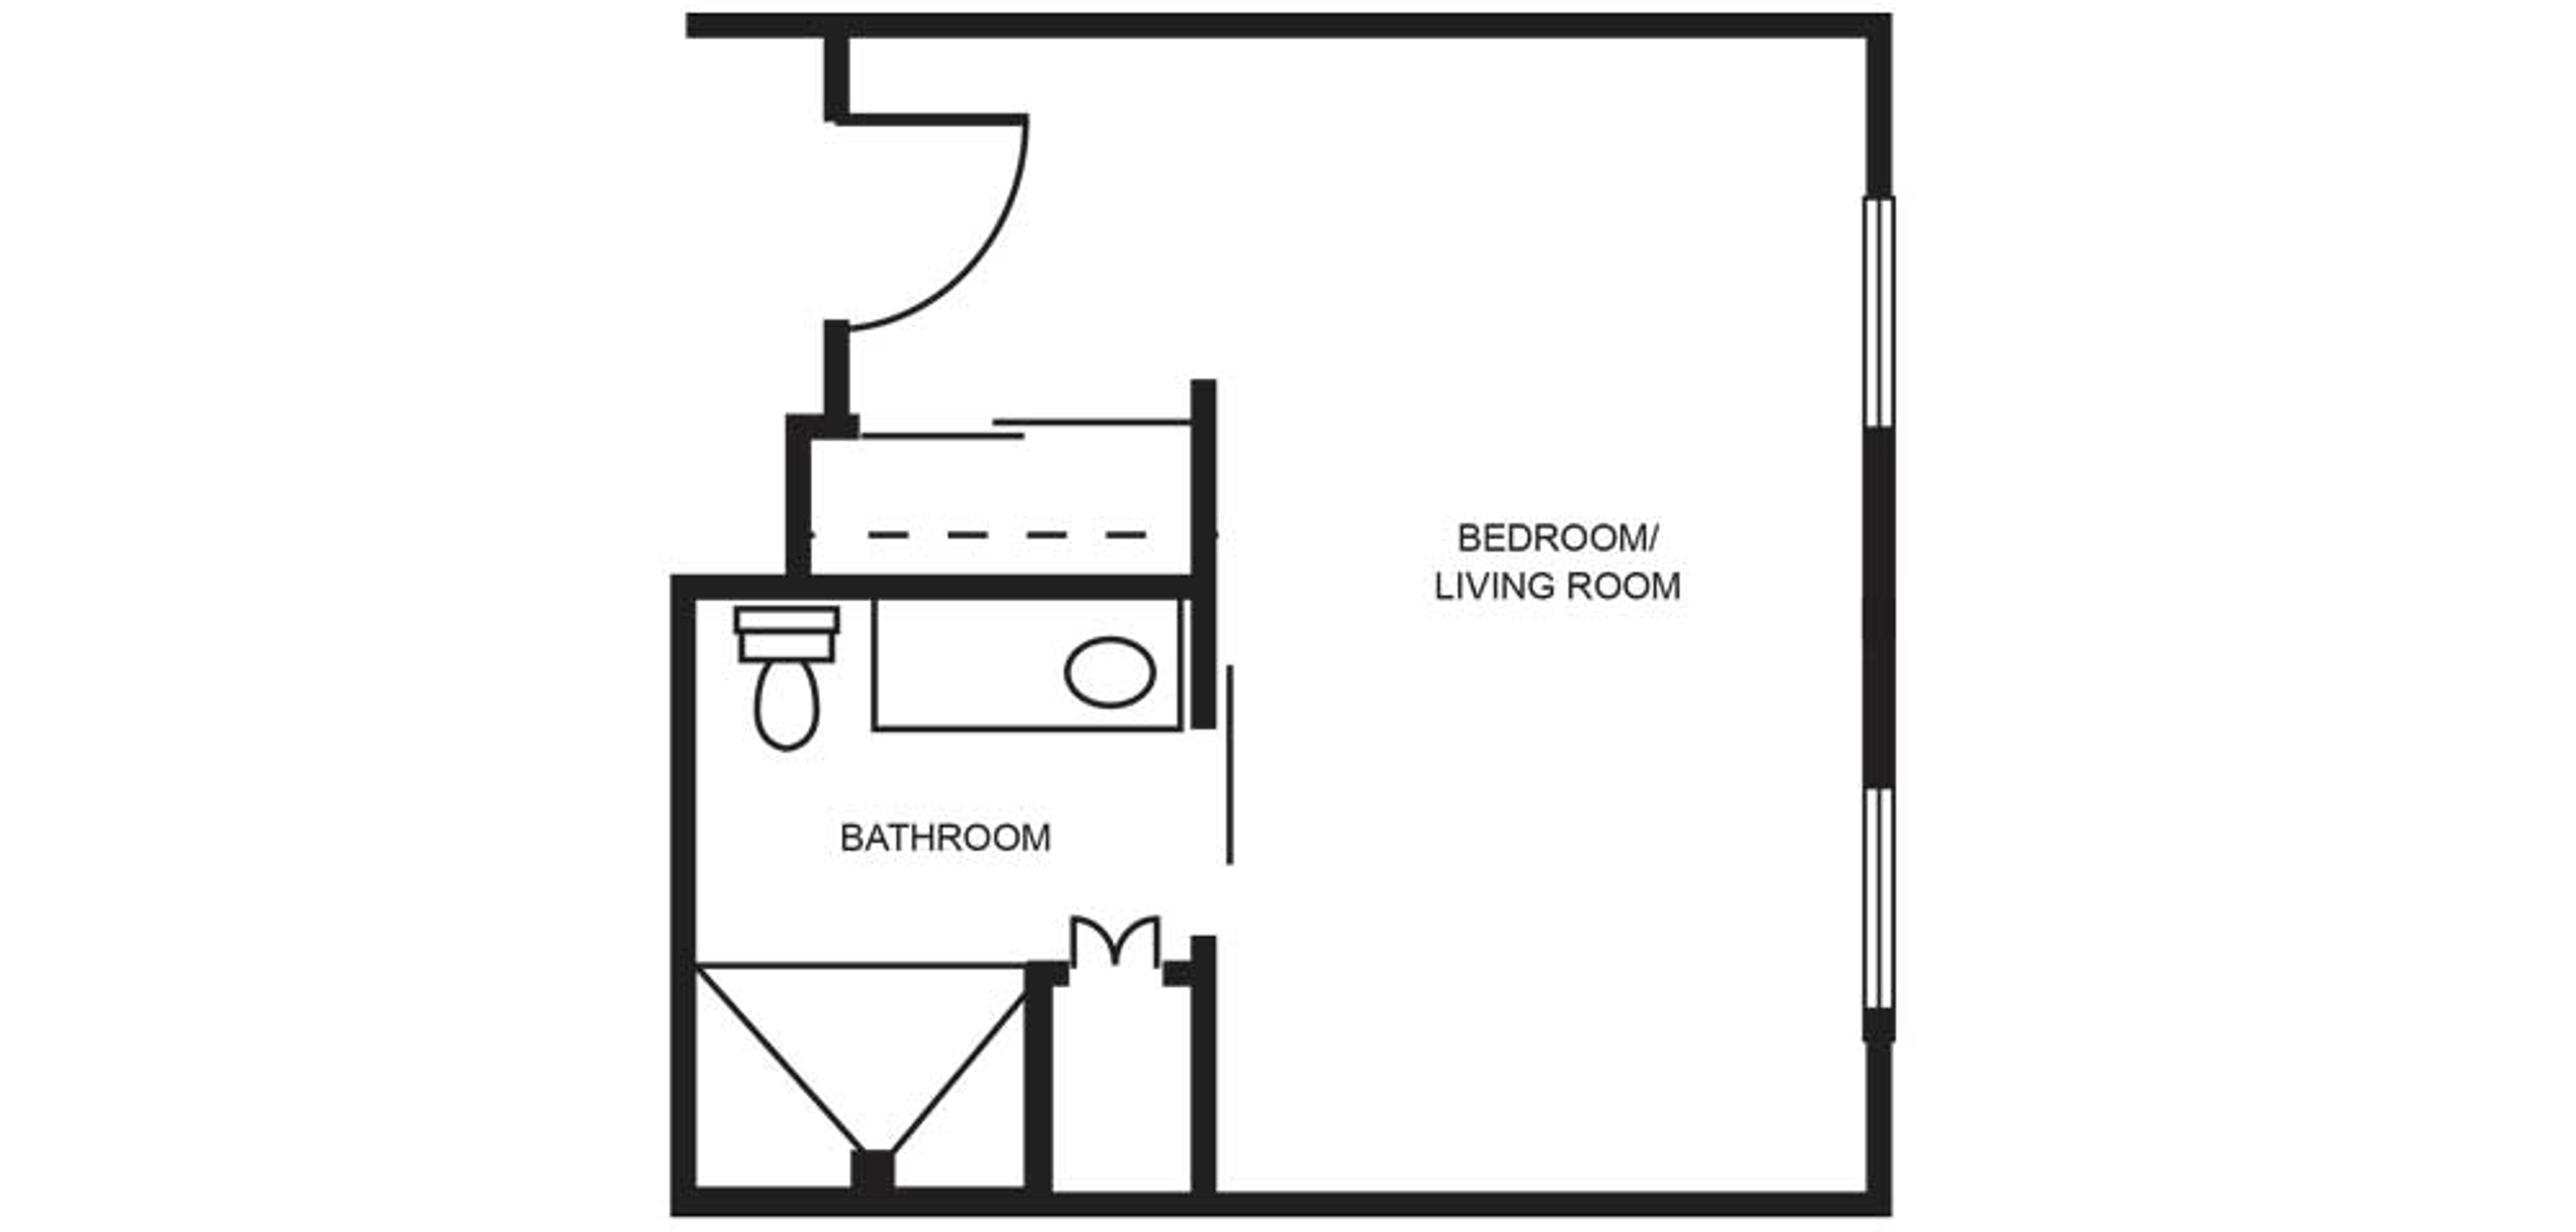 Floorplan - Dogwood Trails - Private suite MC